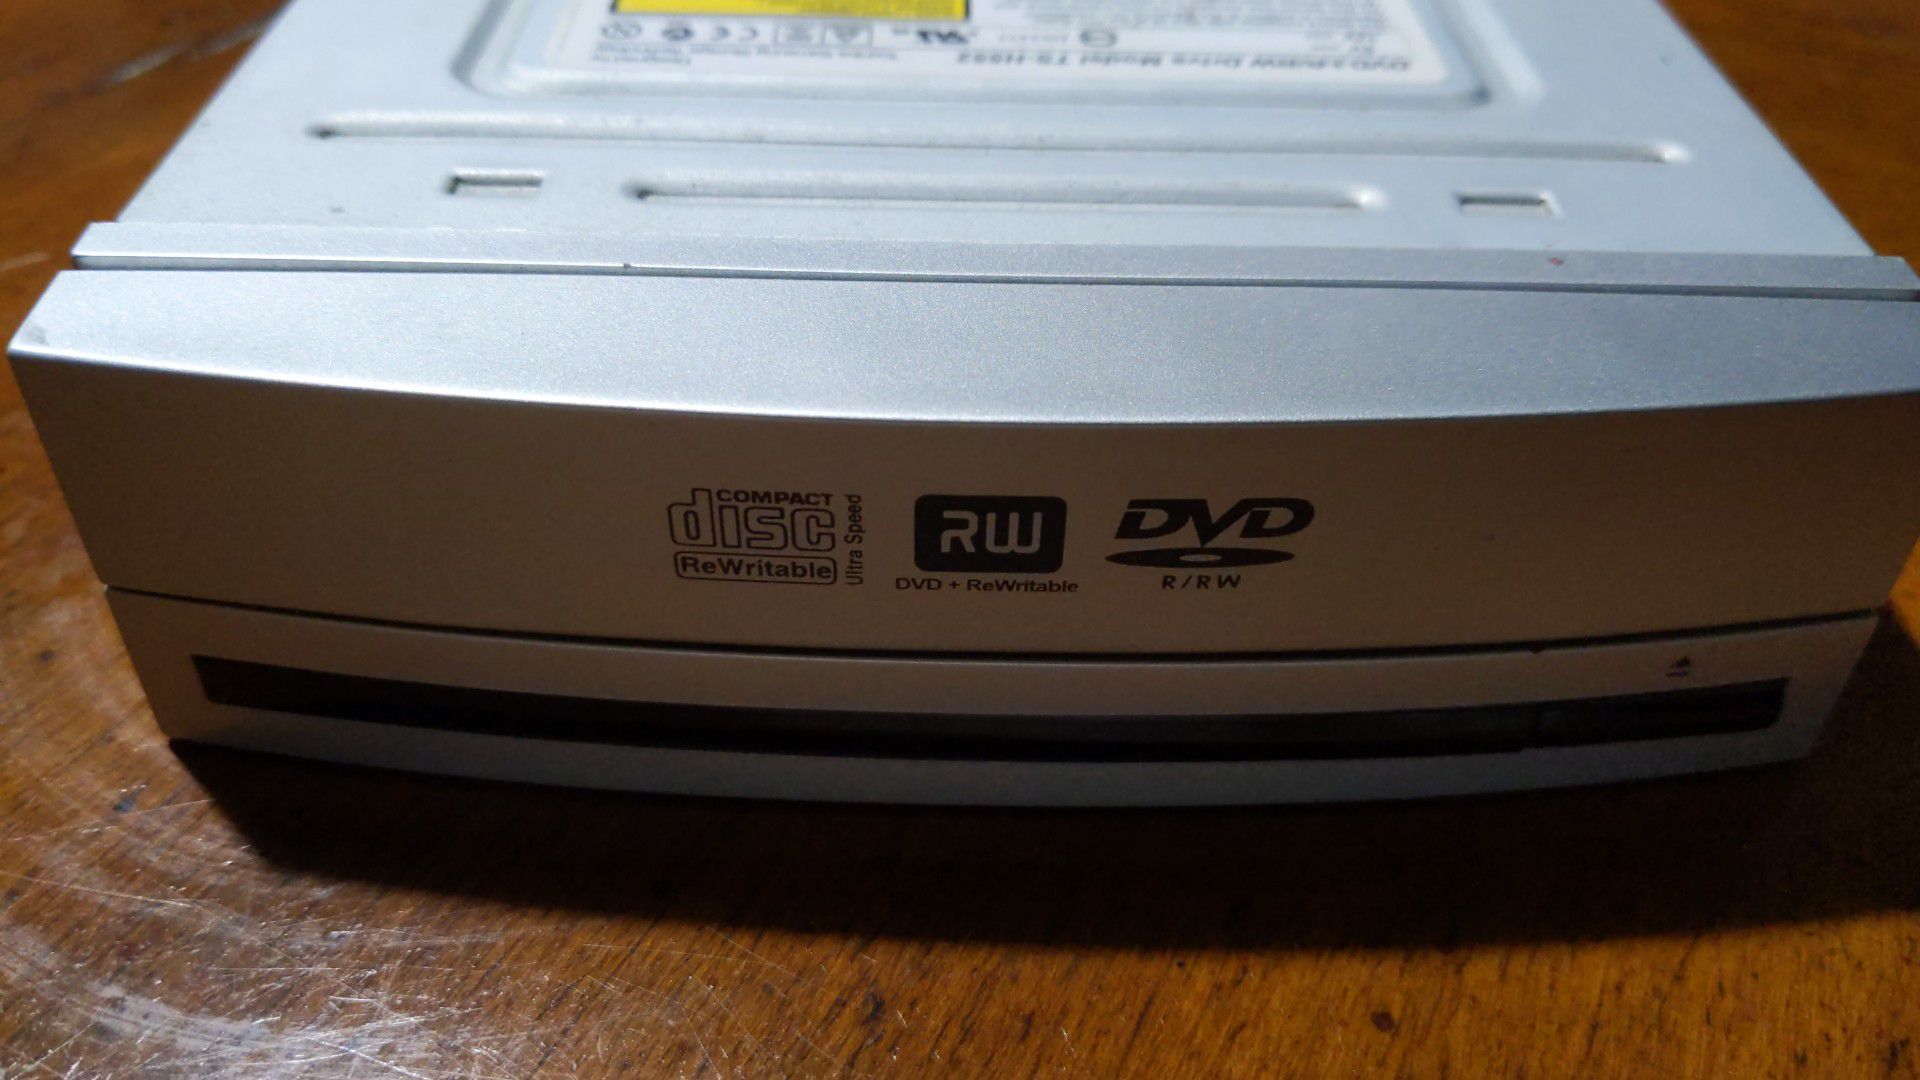 DVD + R/RW Drive Model TS-H552